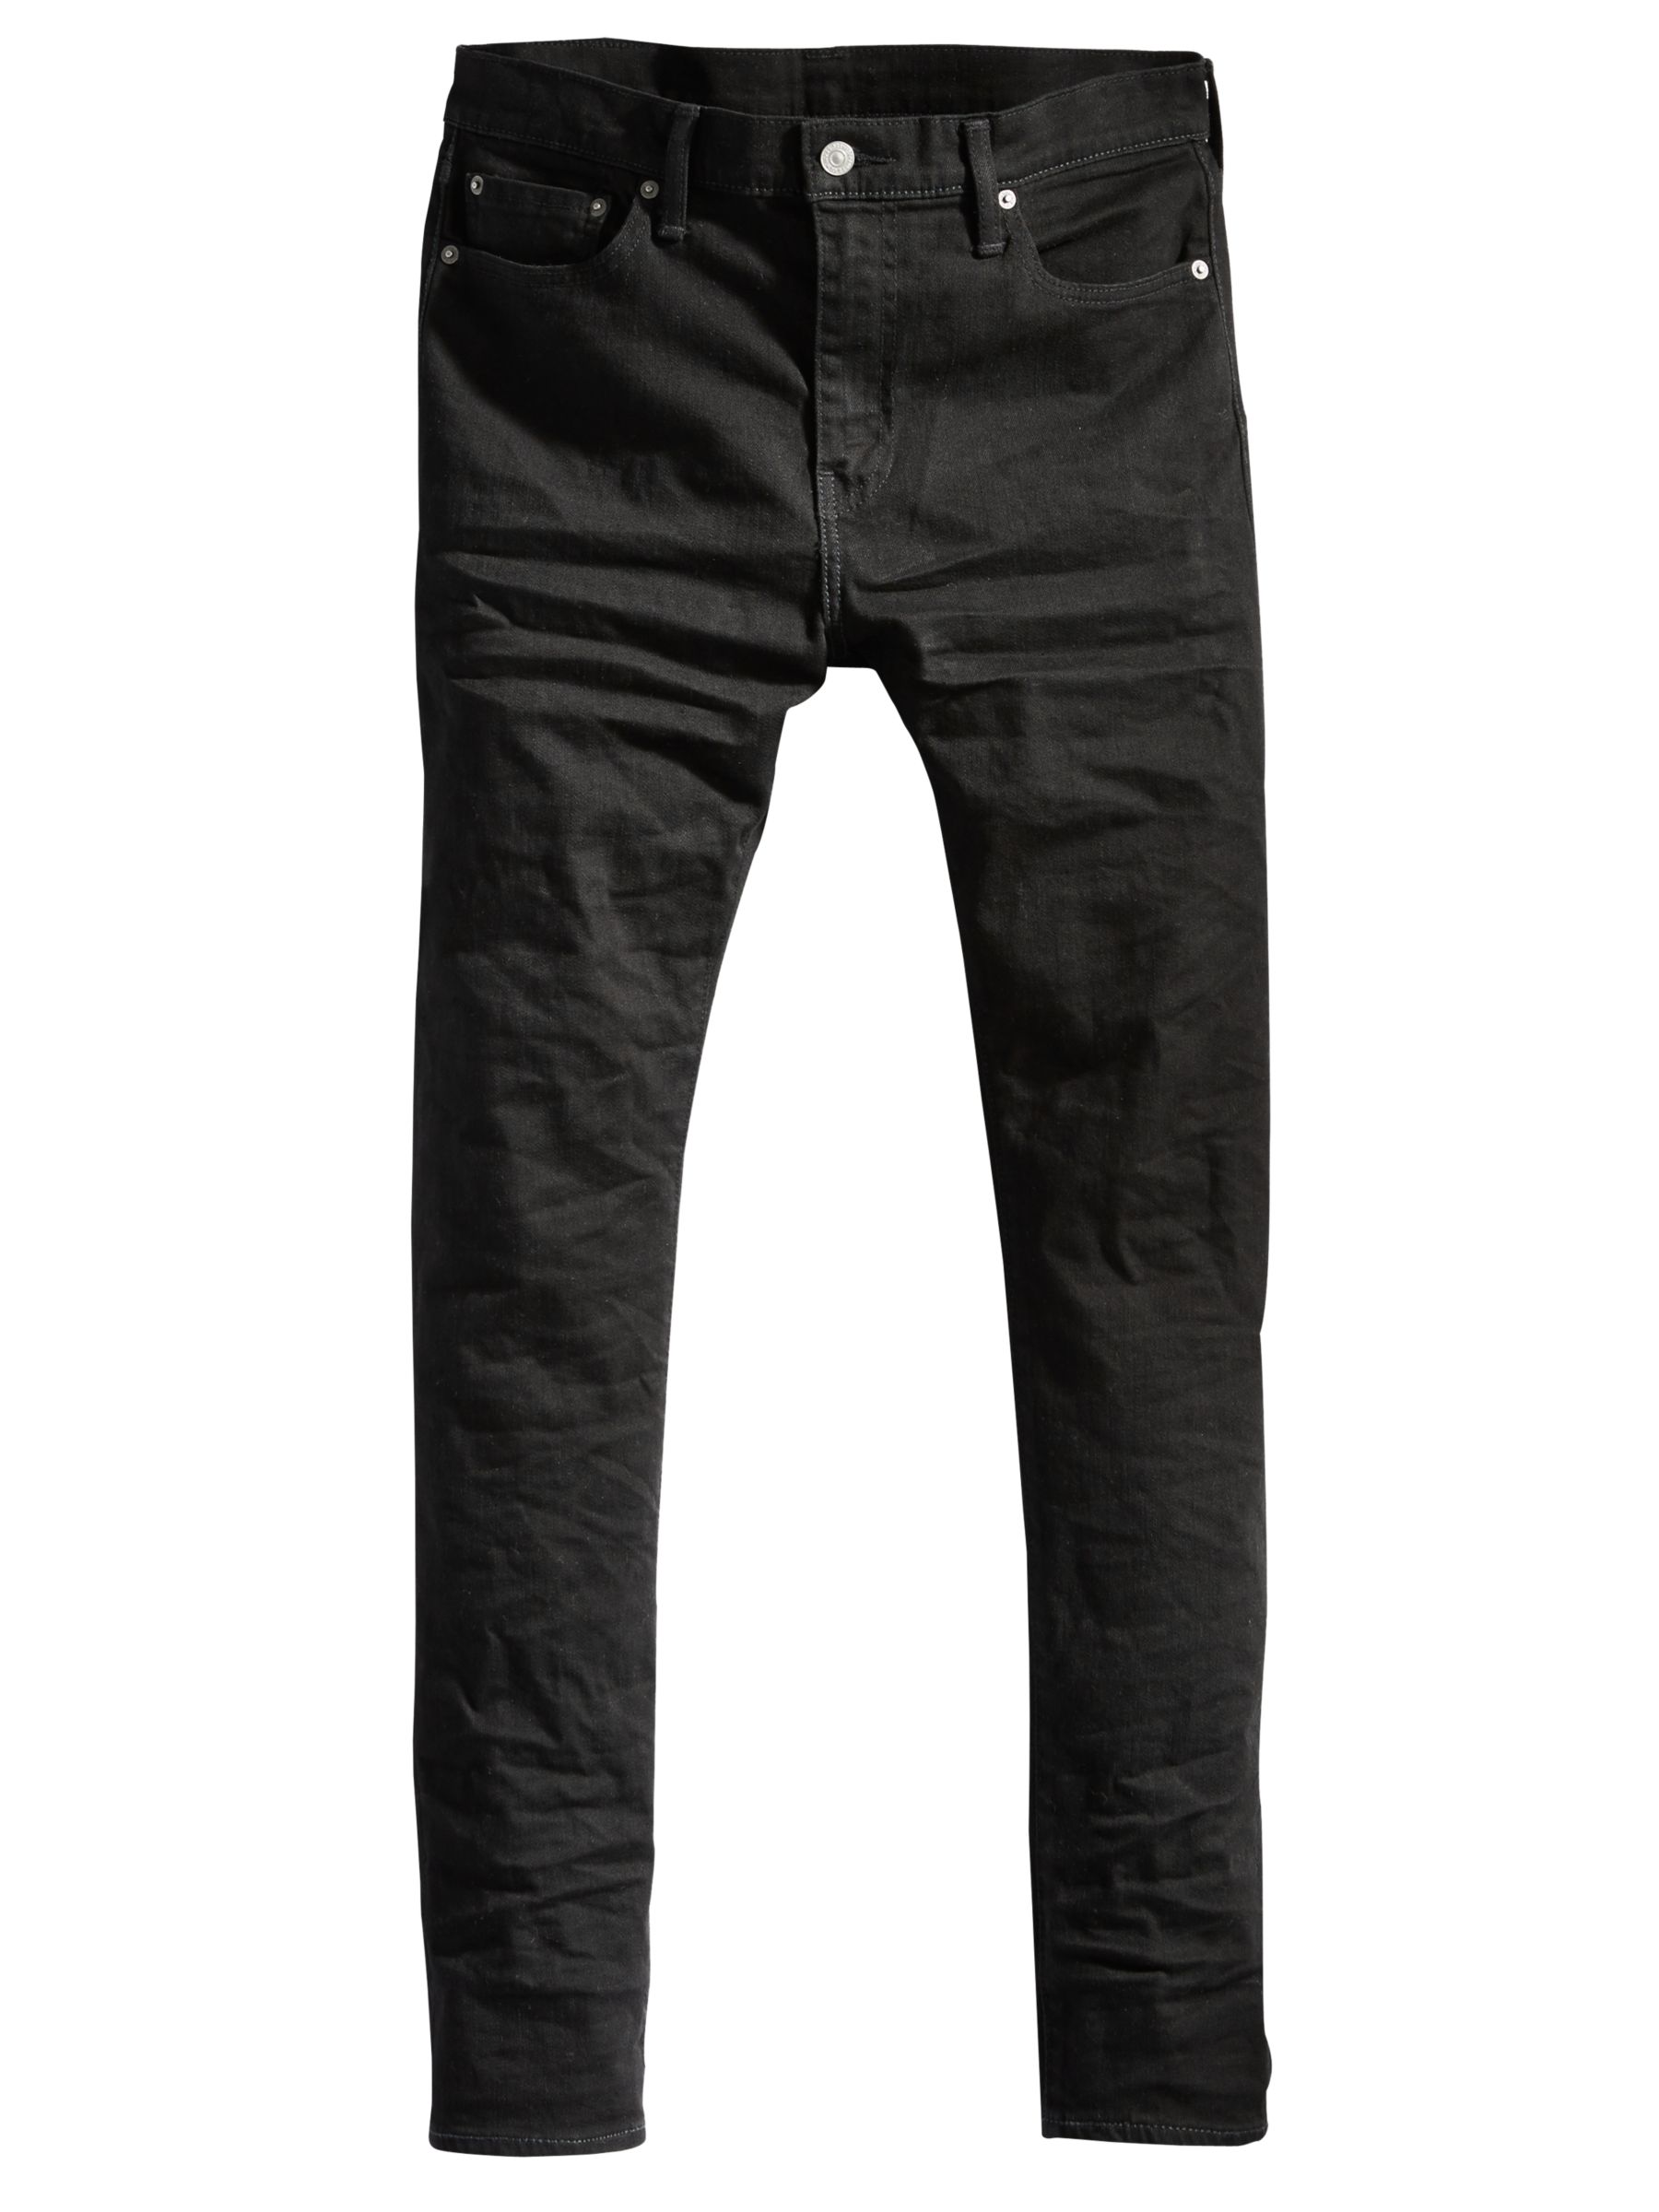 Levi's 510 Skinny Fit Jeans, Nightshine